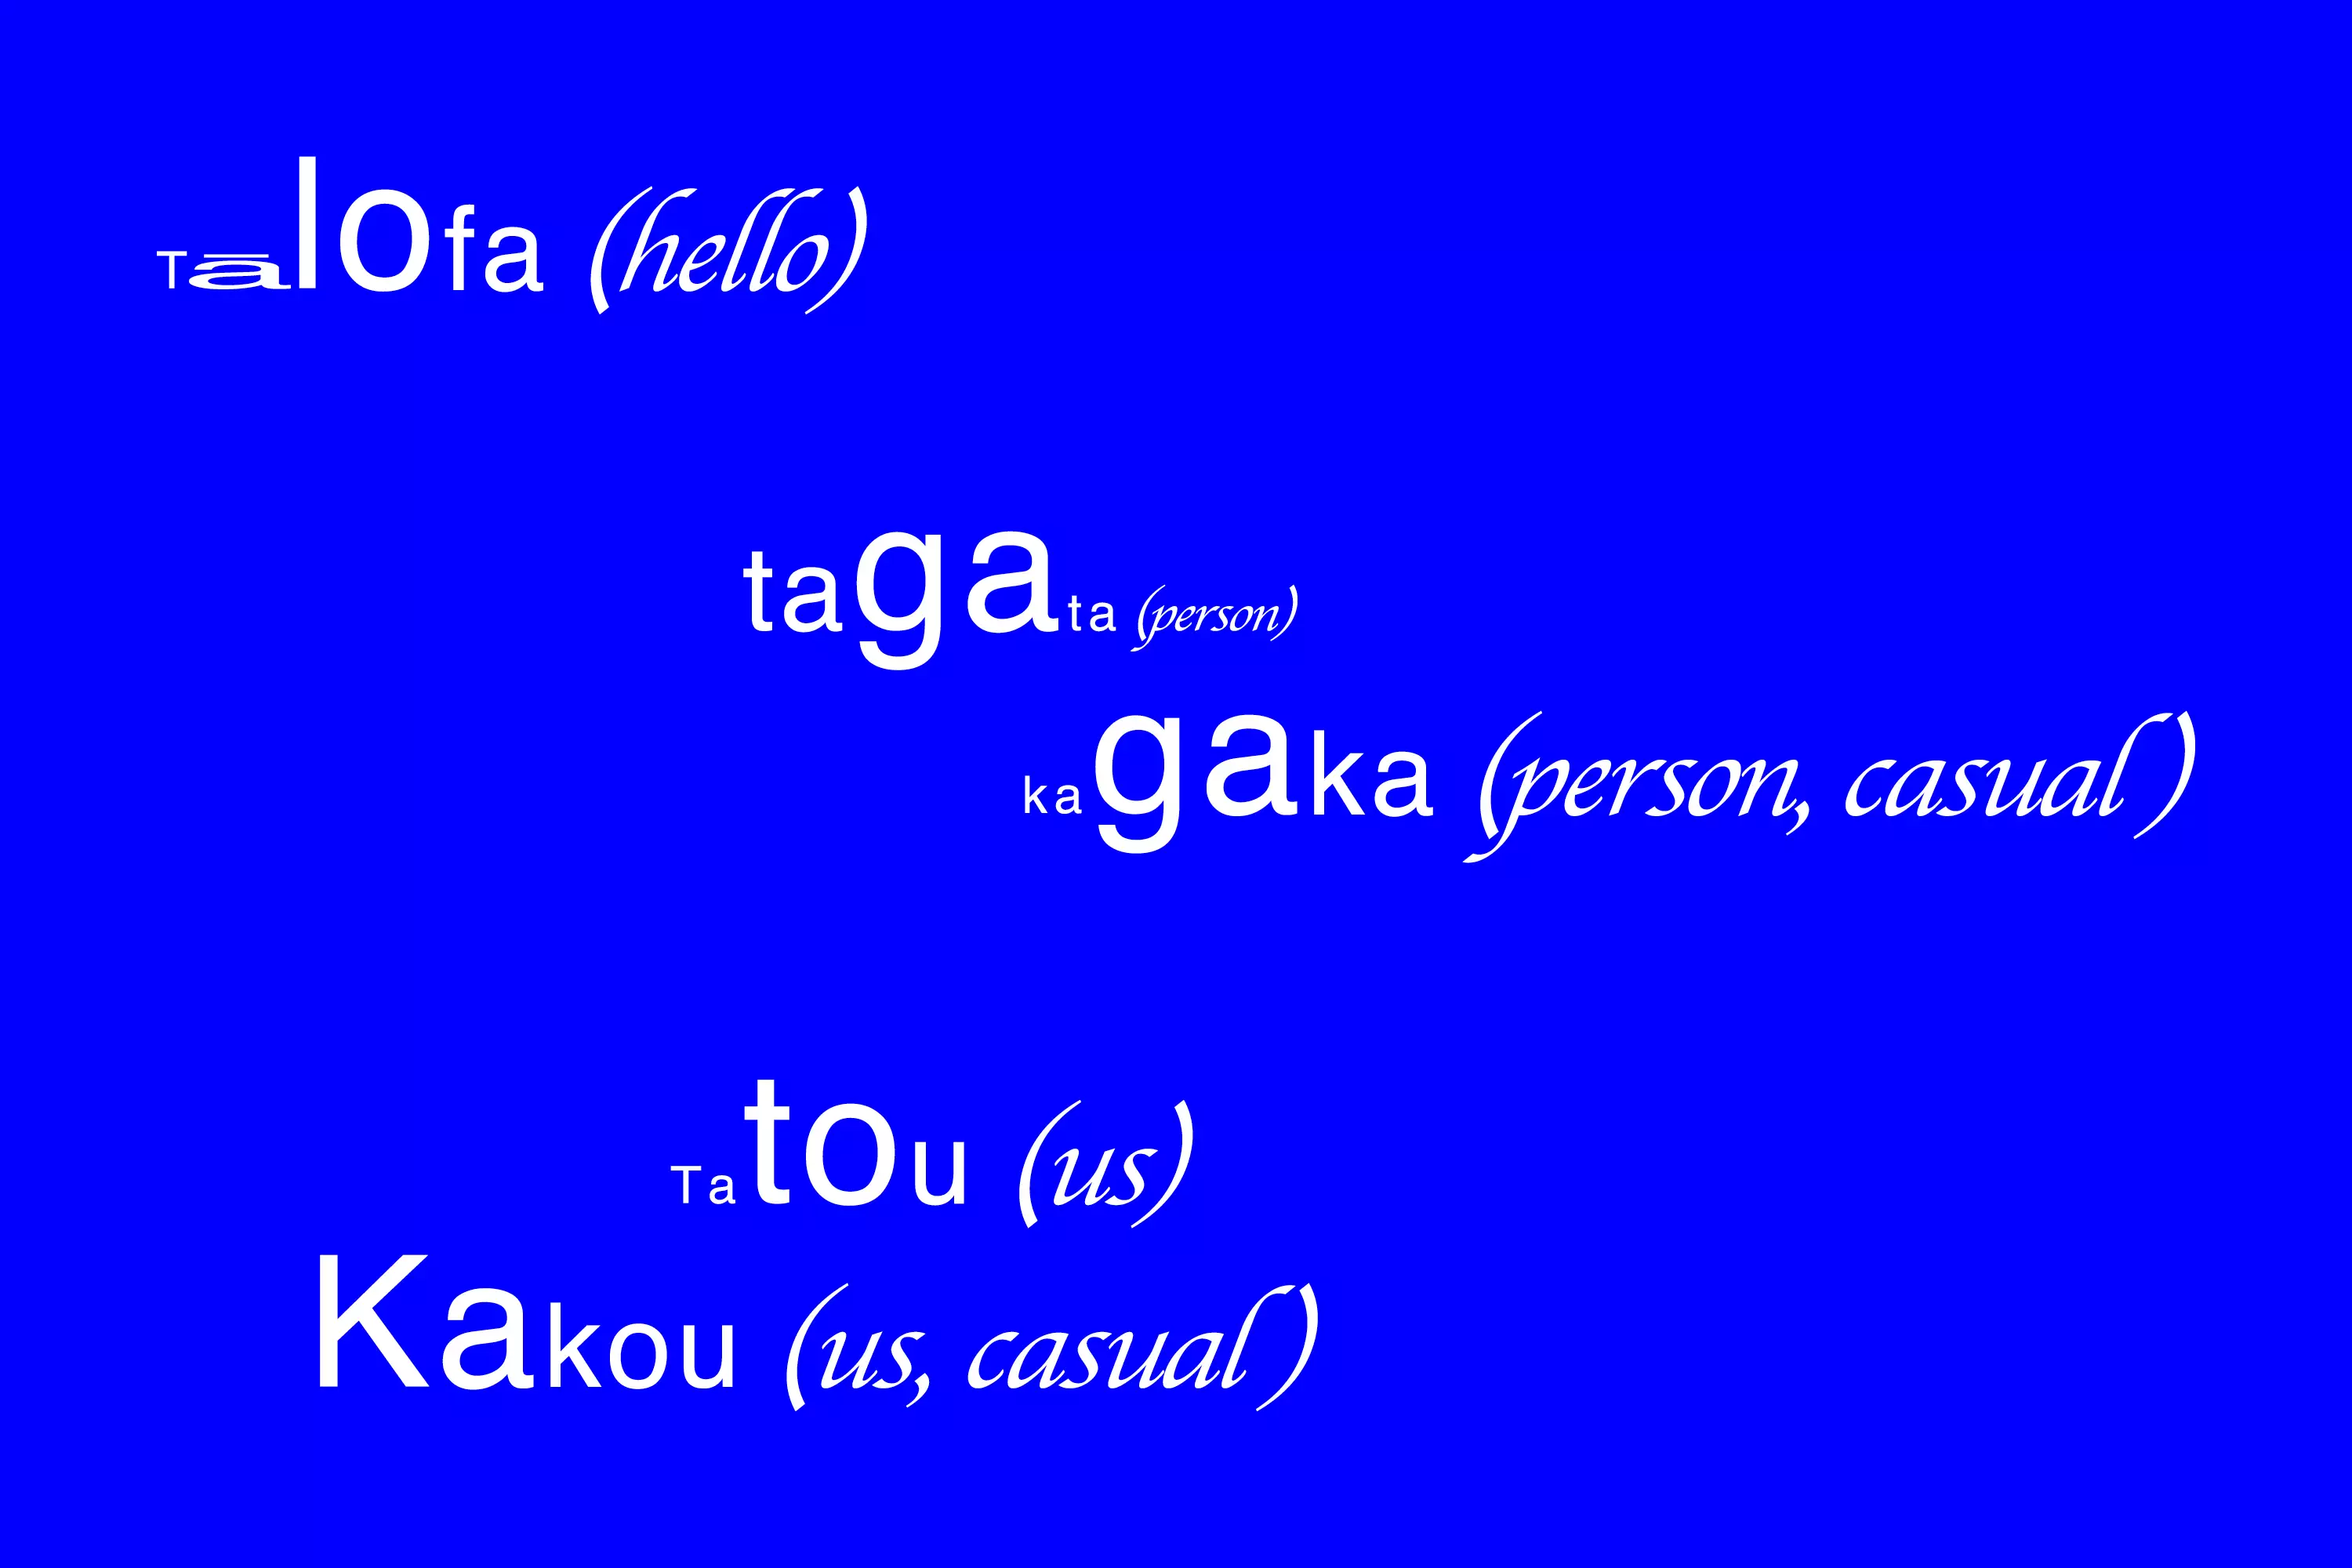 Typographic arrangements illustrate Samoan pronunciation.